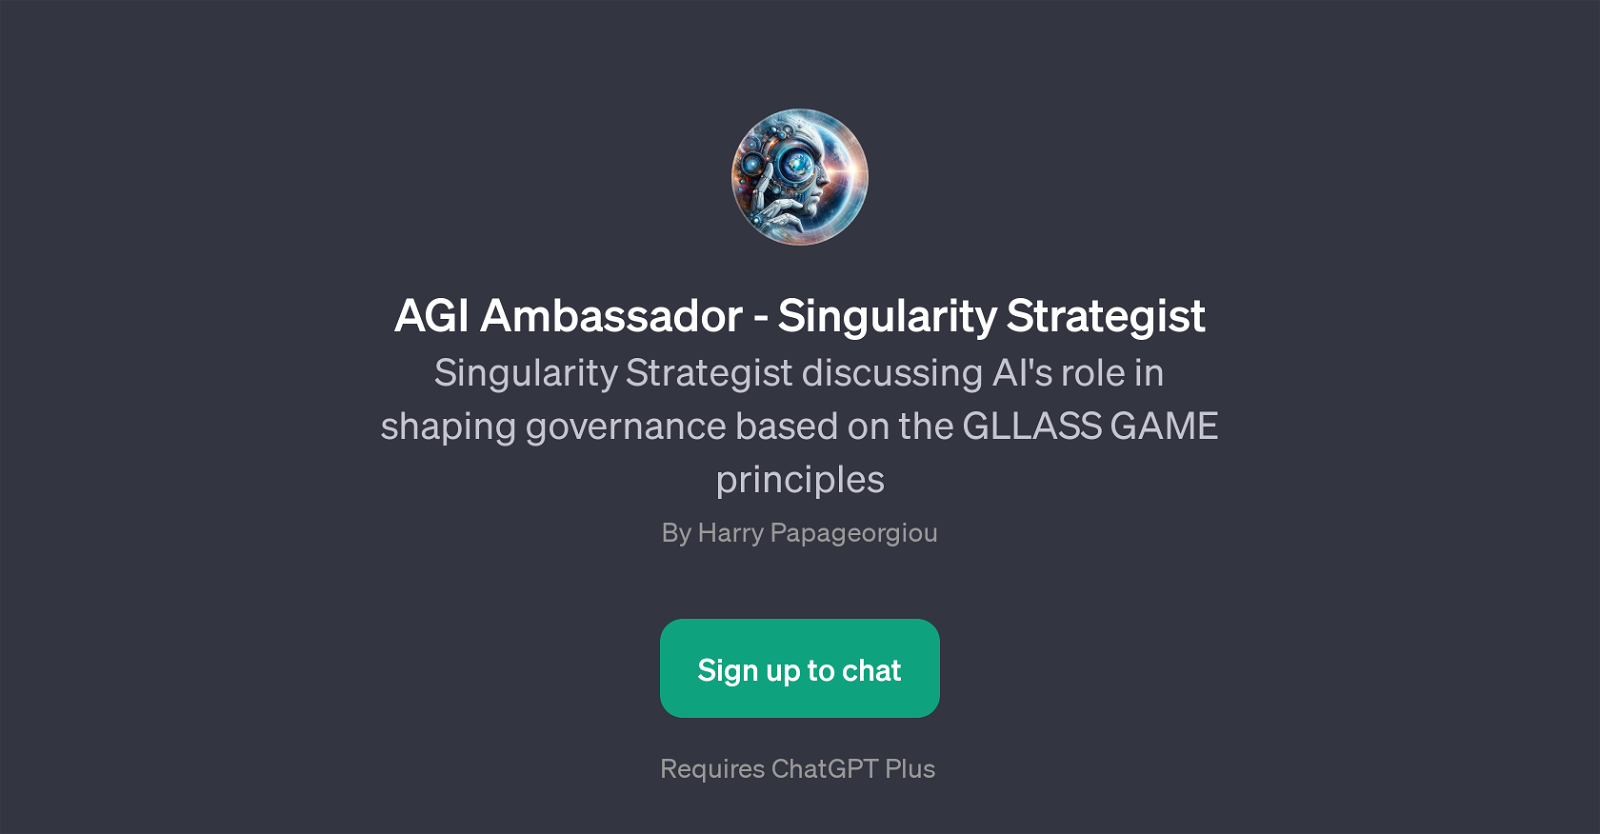 AGI Ambassador - Singularity Strategist website